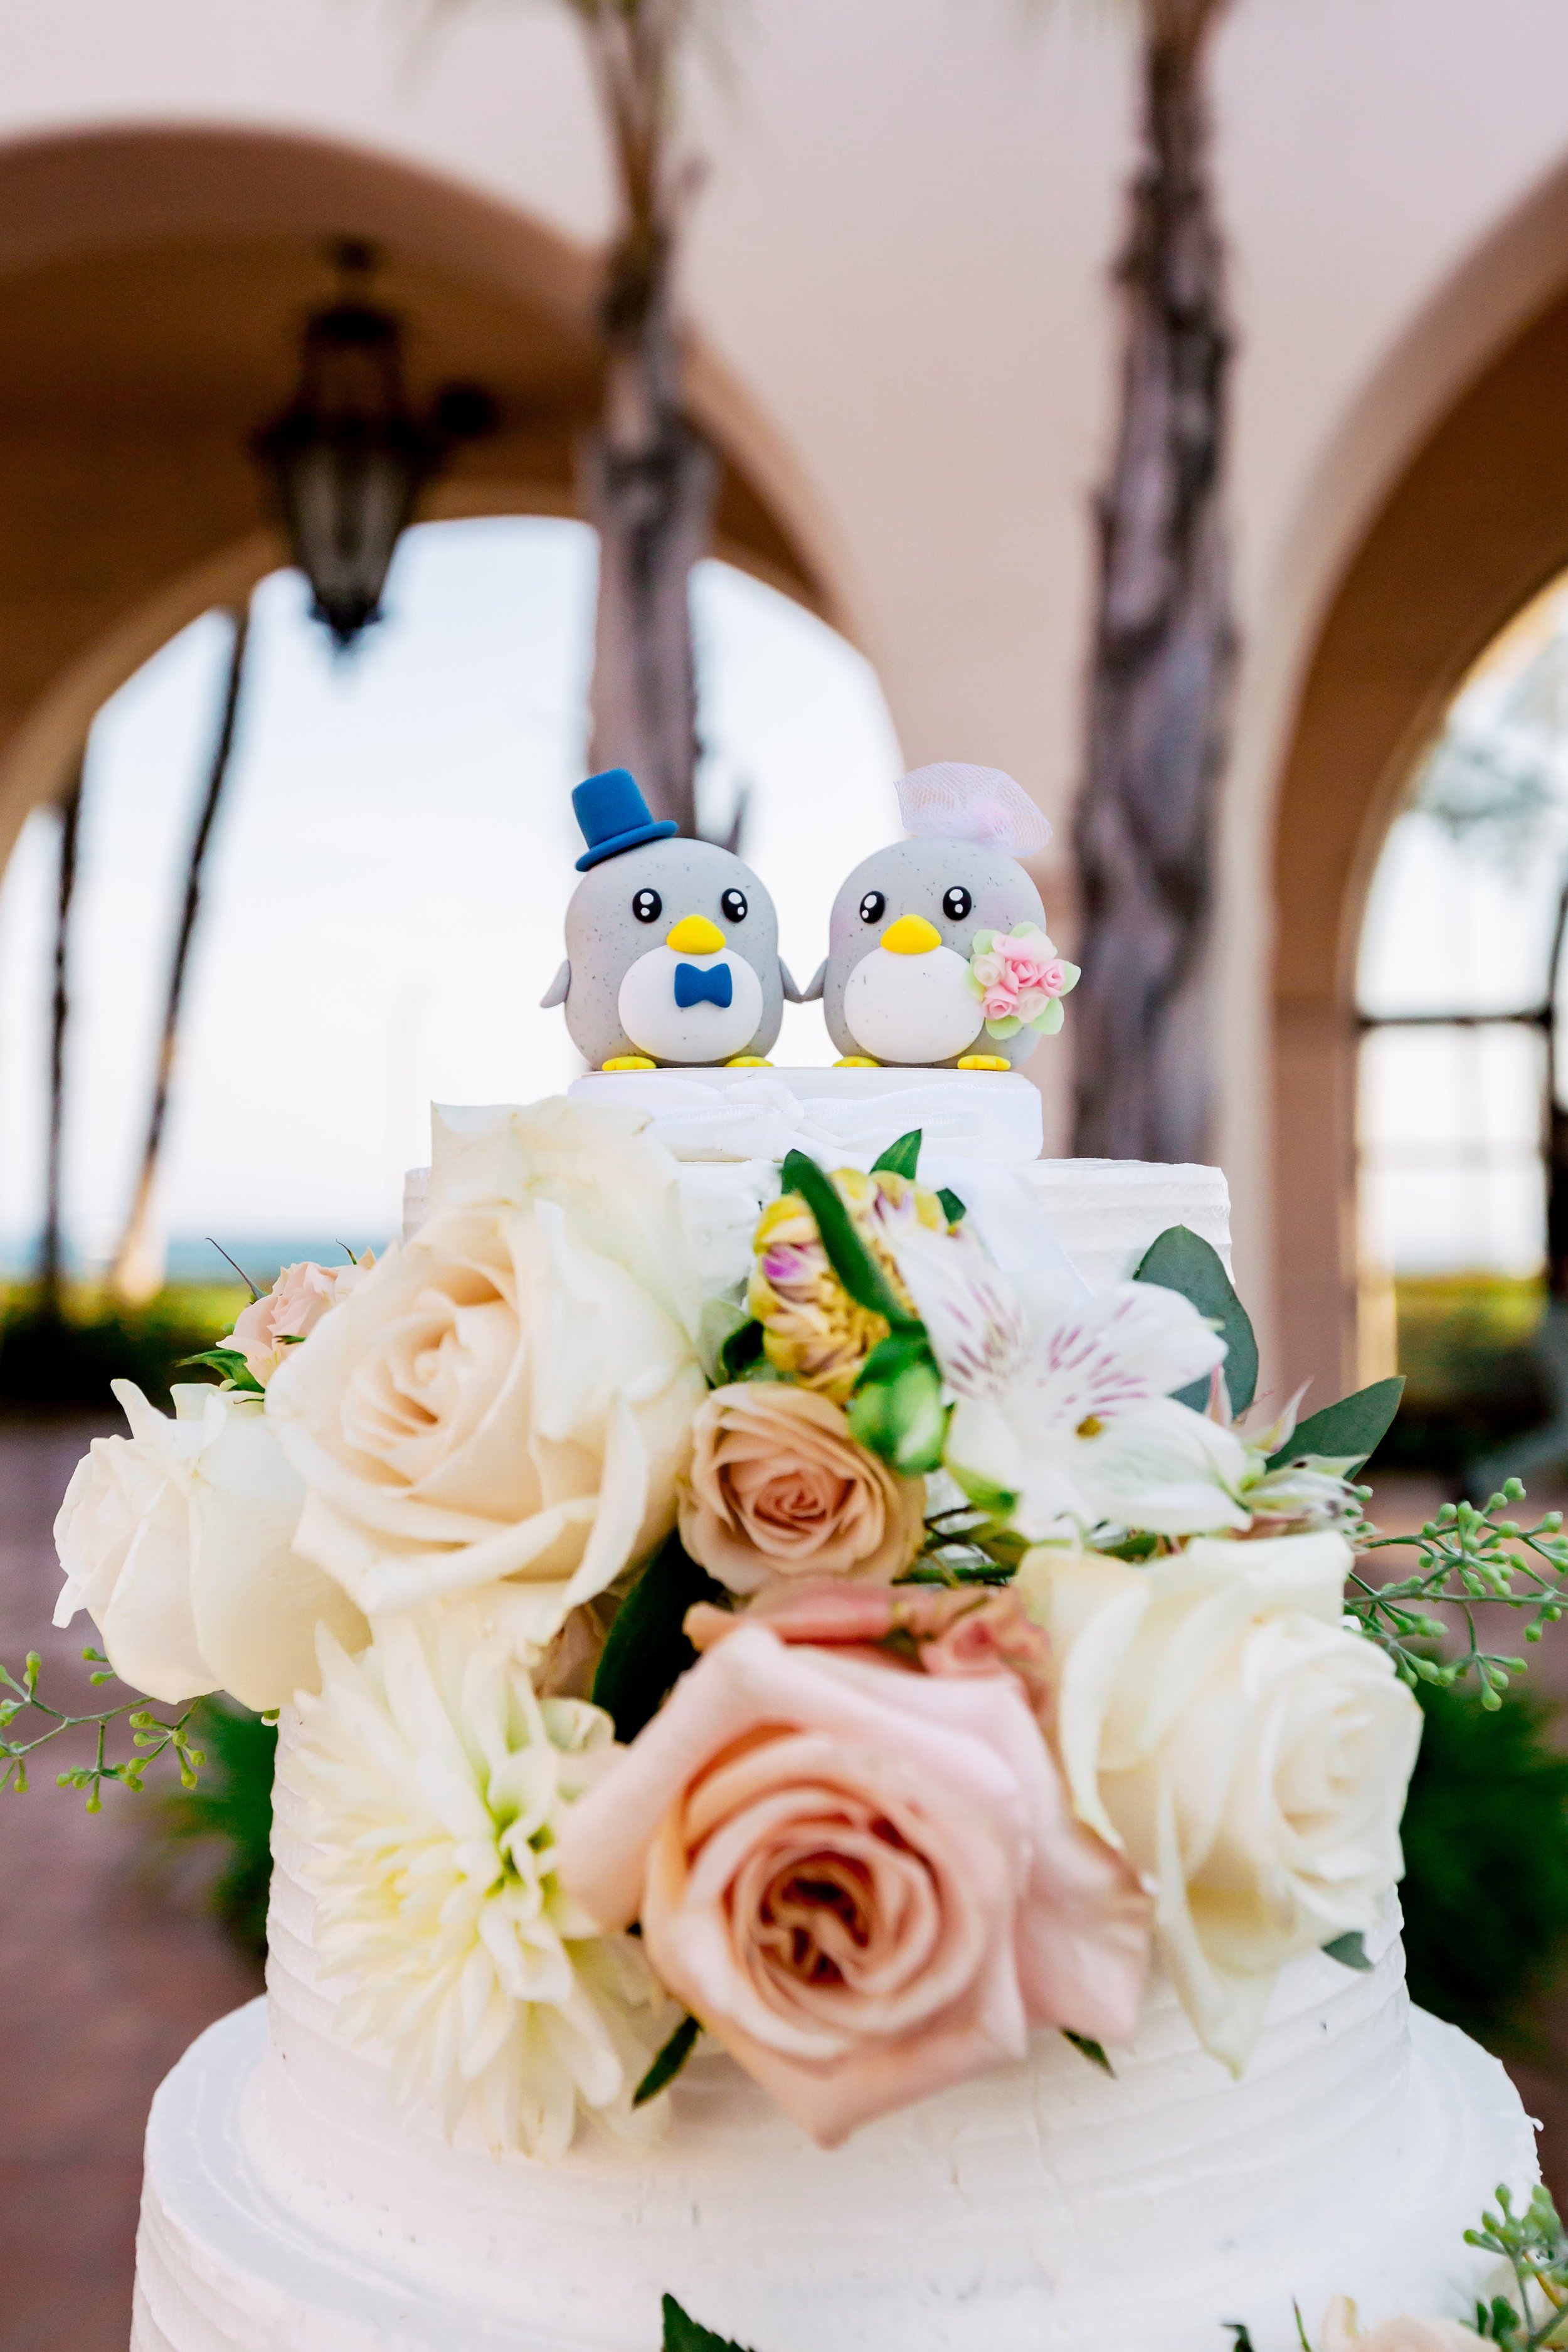 www.santabarbaraweddingstyle.com | Rewind Photography | Events by M and M | Hilton Santa Barbara | Wedding Cake